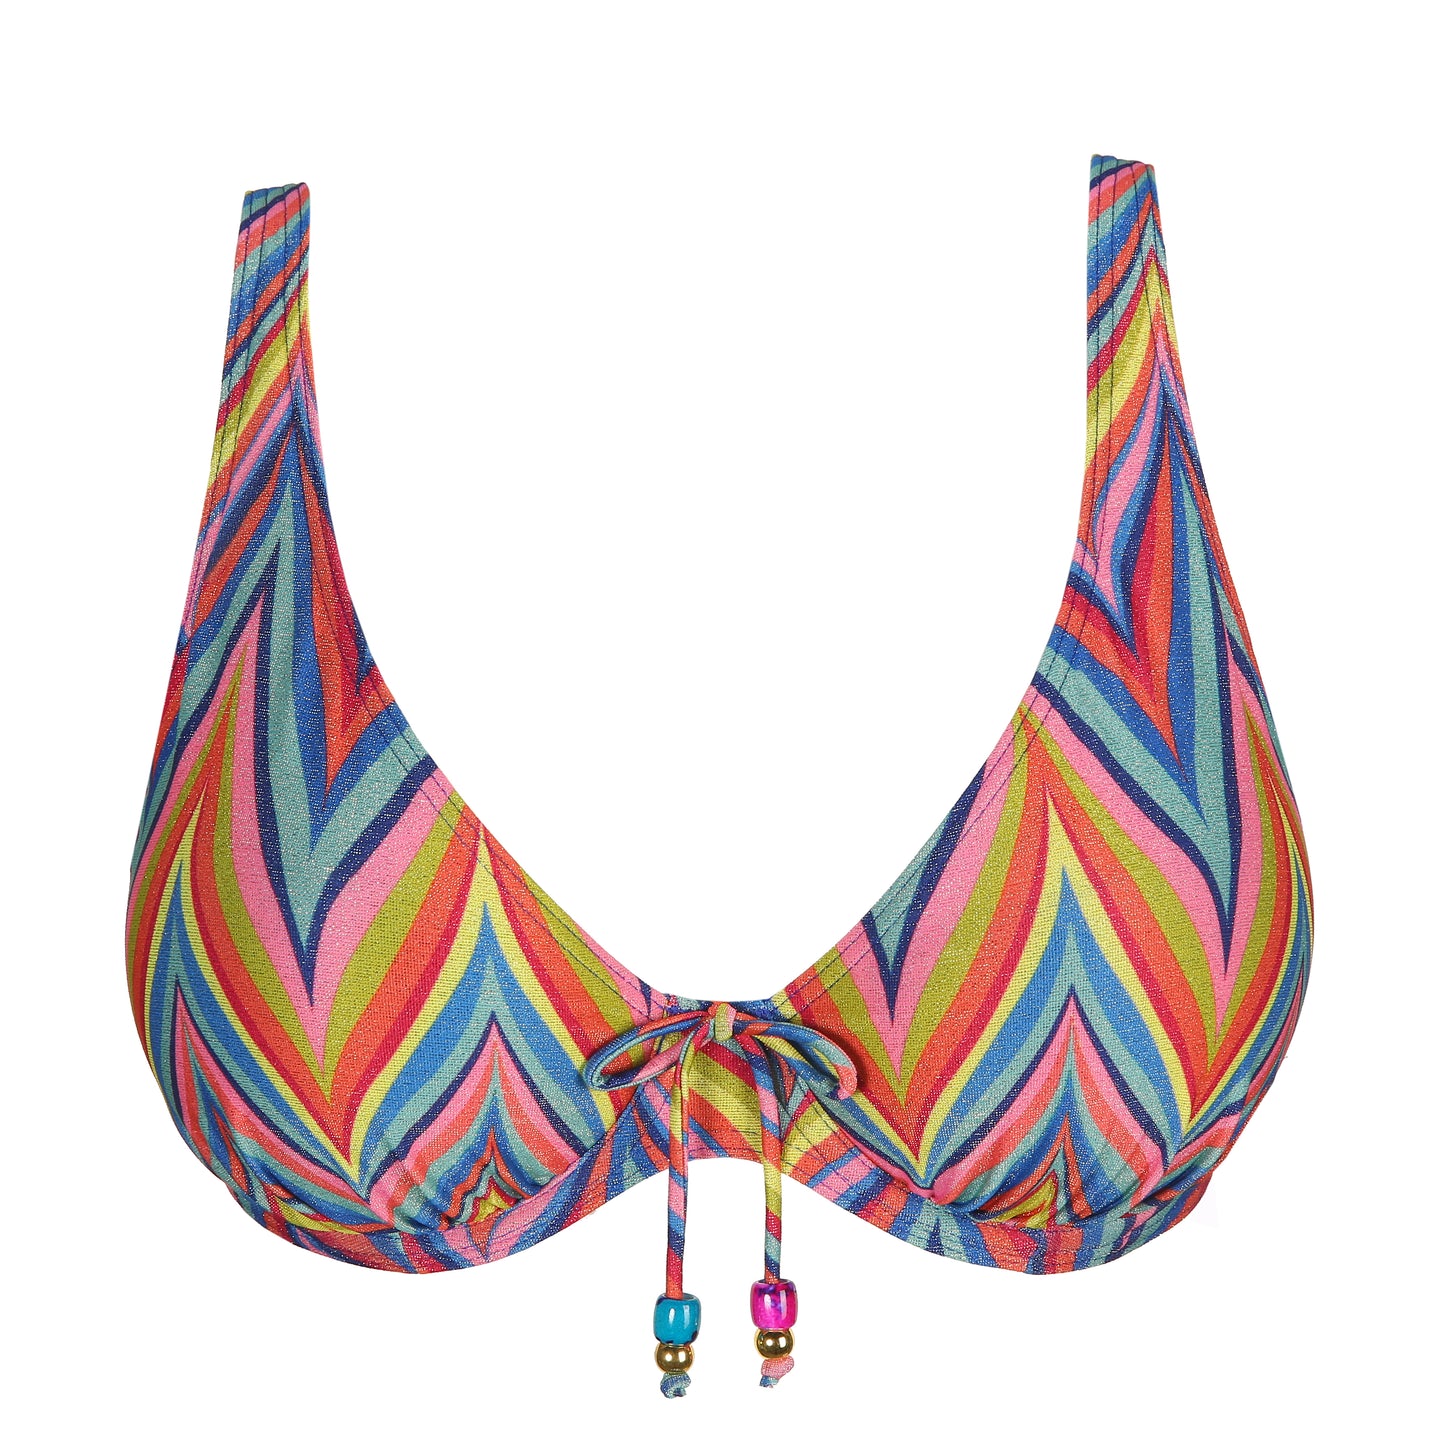 Empreinte Prisme Bikini Bottom – Melmira Bra & Swimsuits